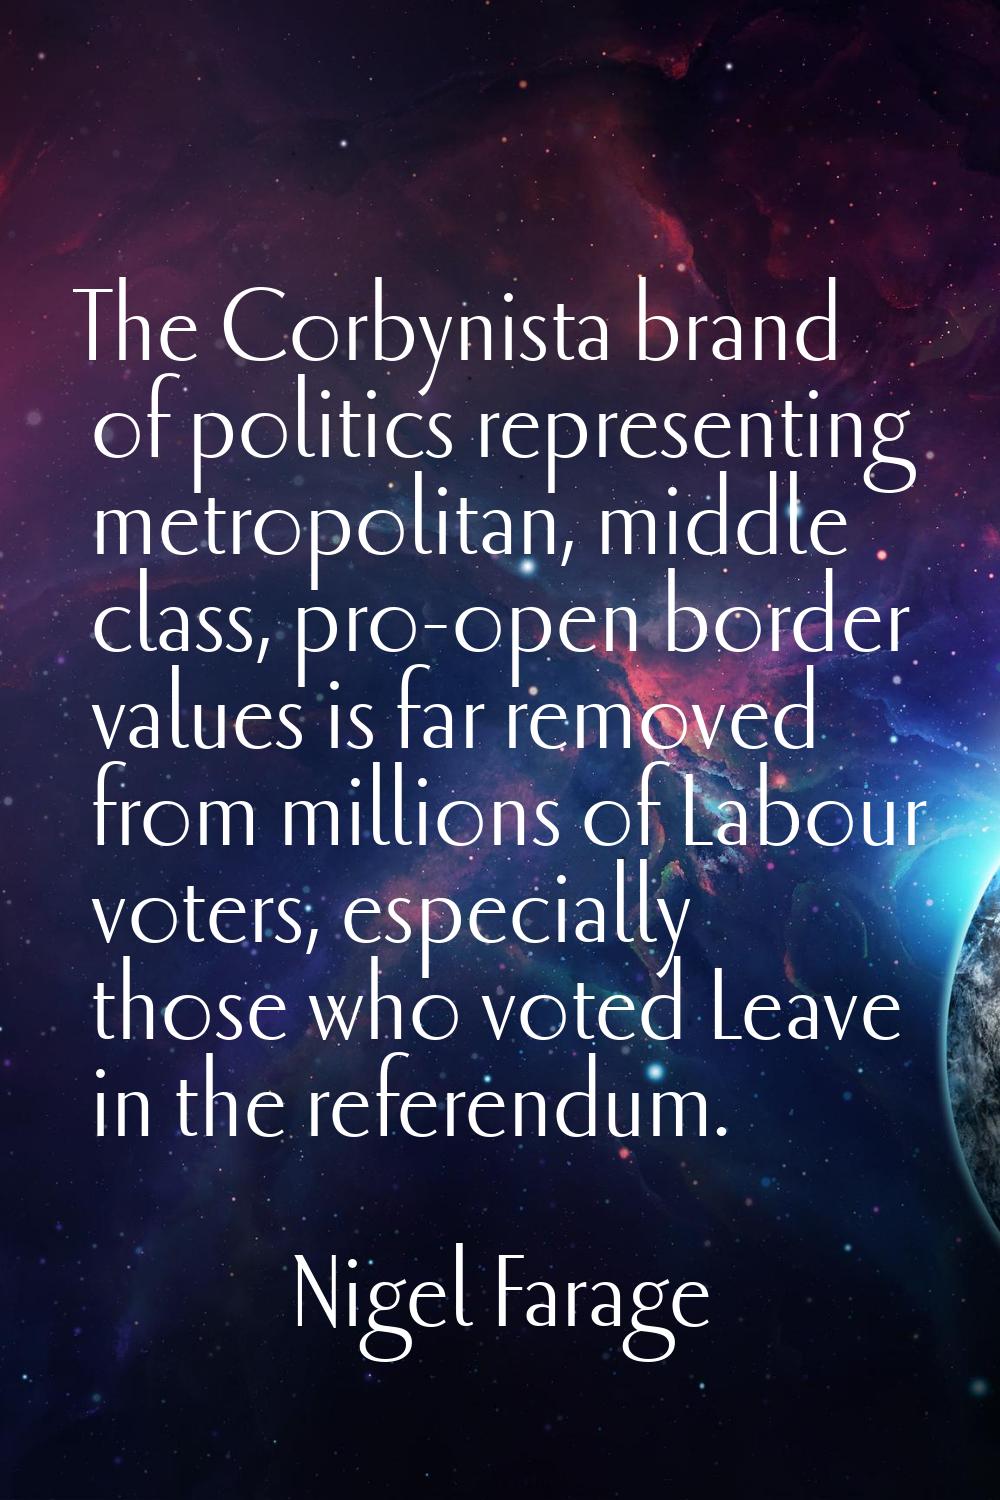 The Corbynista brand of politics representing metropolitan, middle class, pro-open border values is